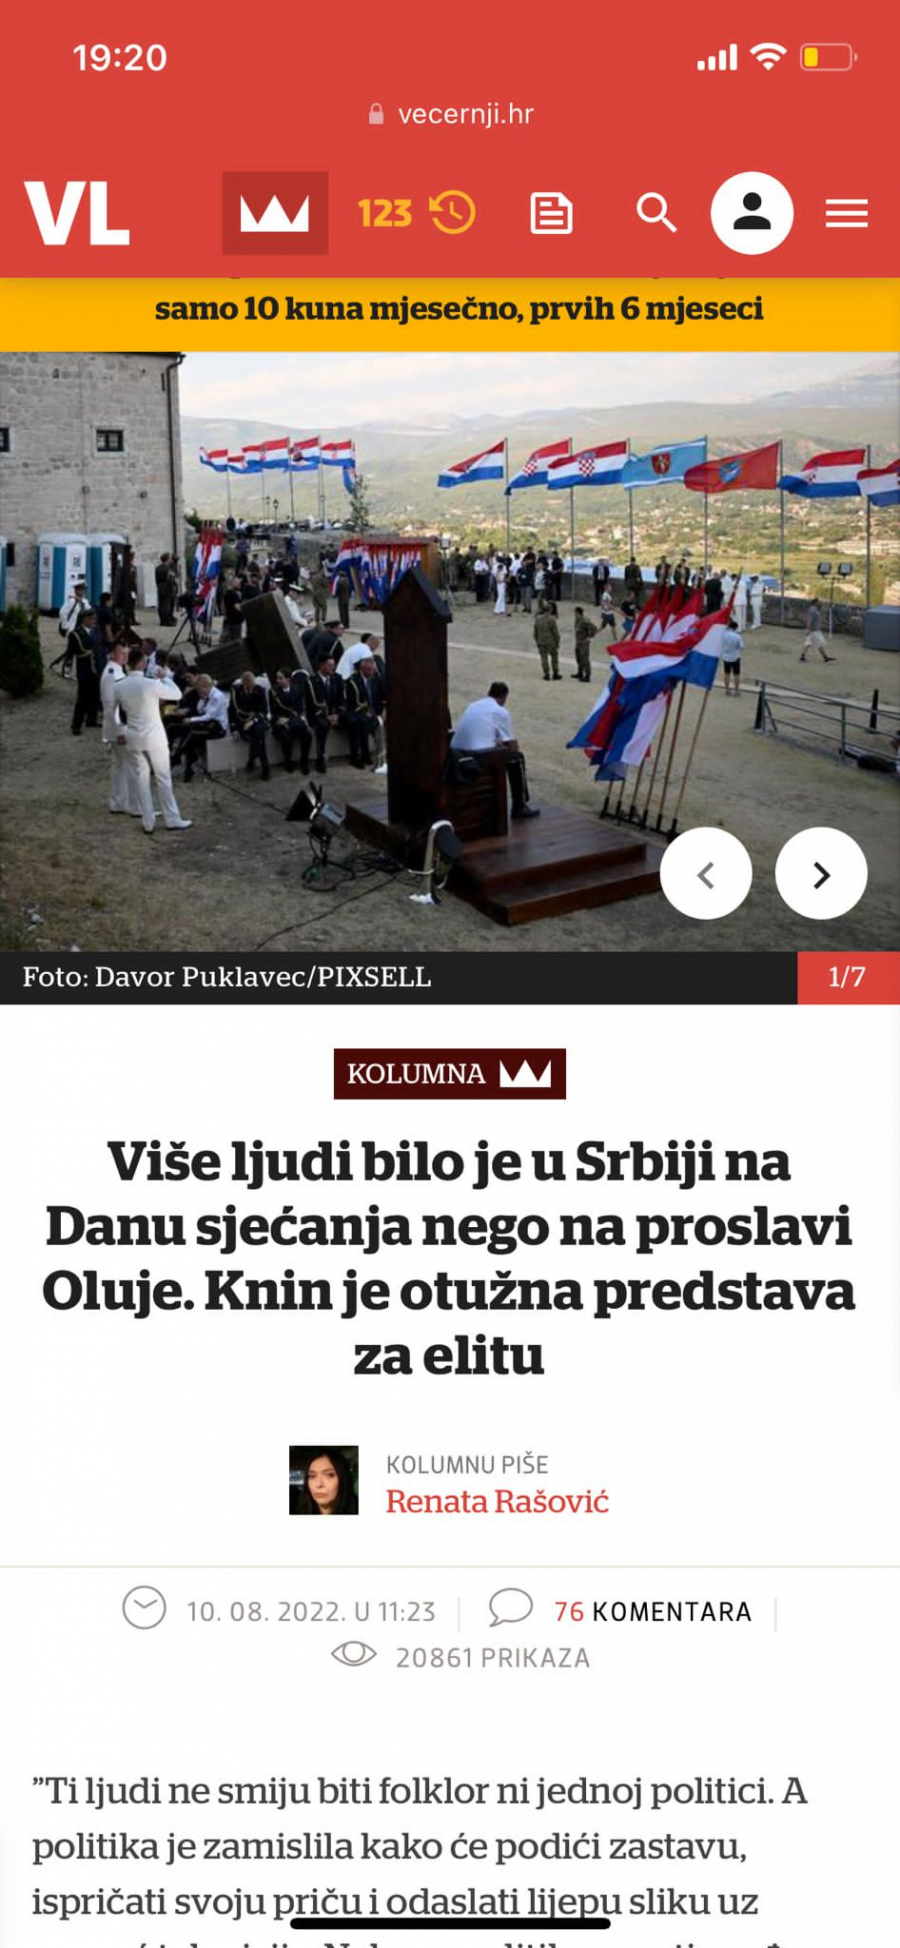 HRVATSKA KOLUMNISTKINJA PRIZNALA Više naroda okupi Vučić da obeleži stradanje Srba nego hrvatska vlast da proslavi 